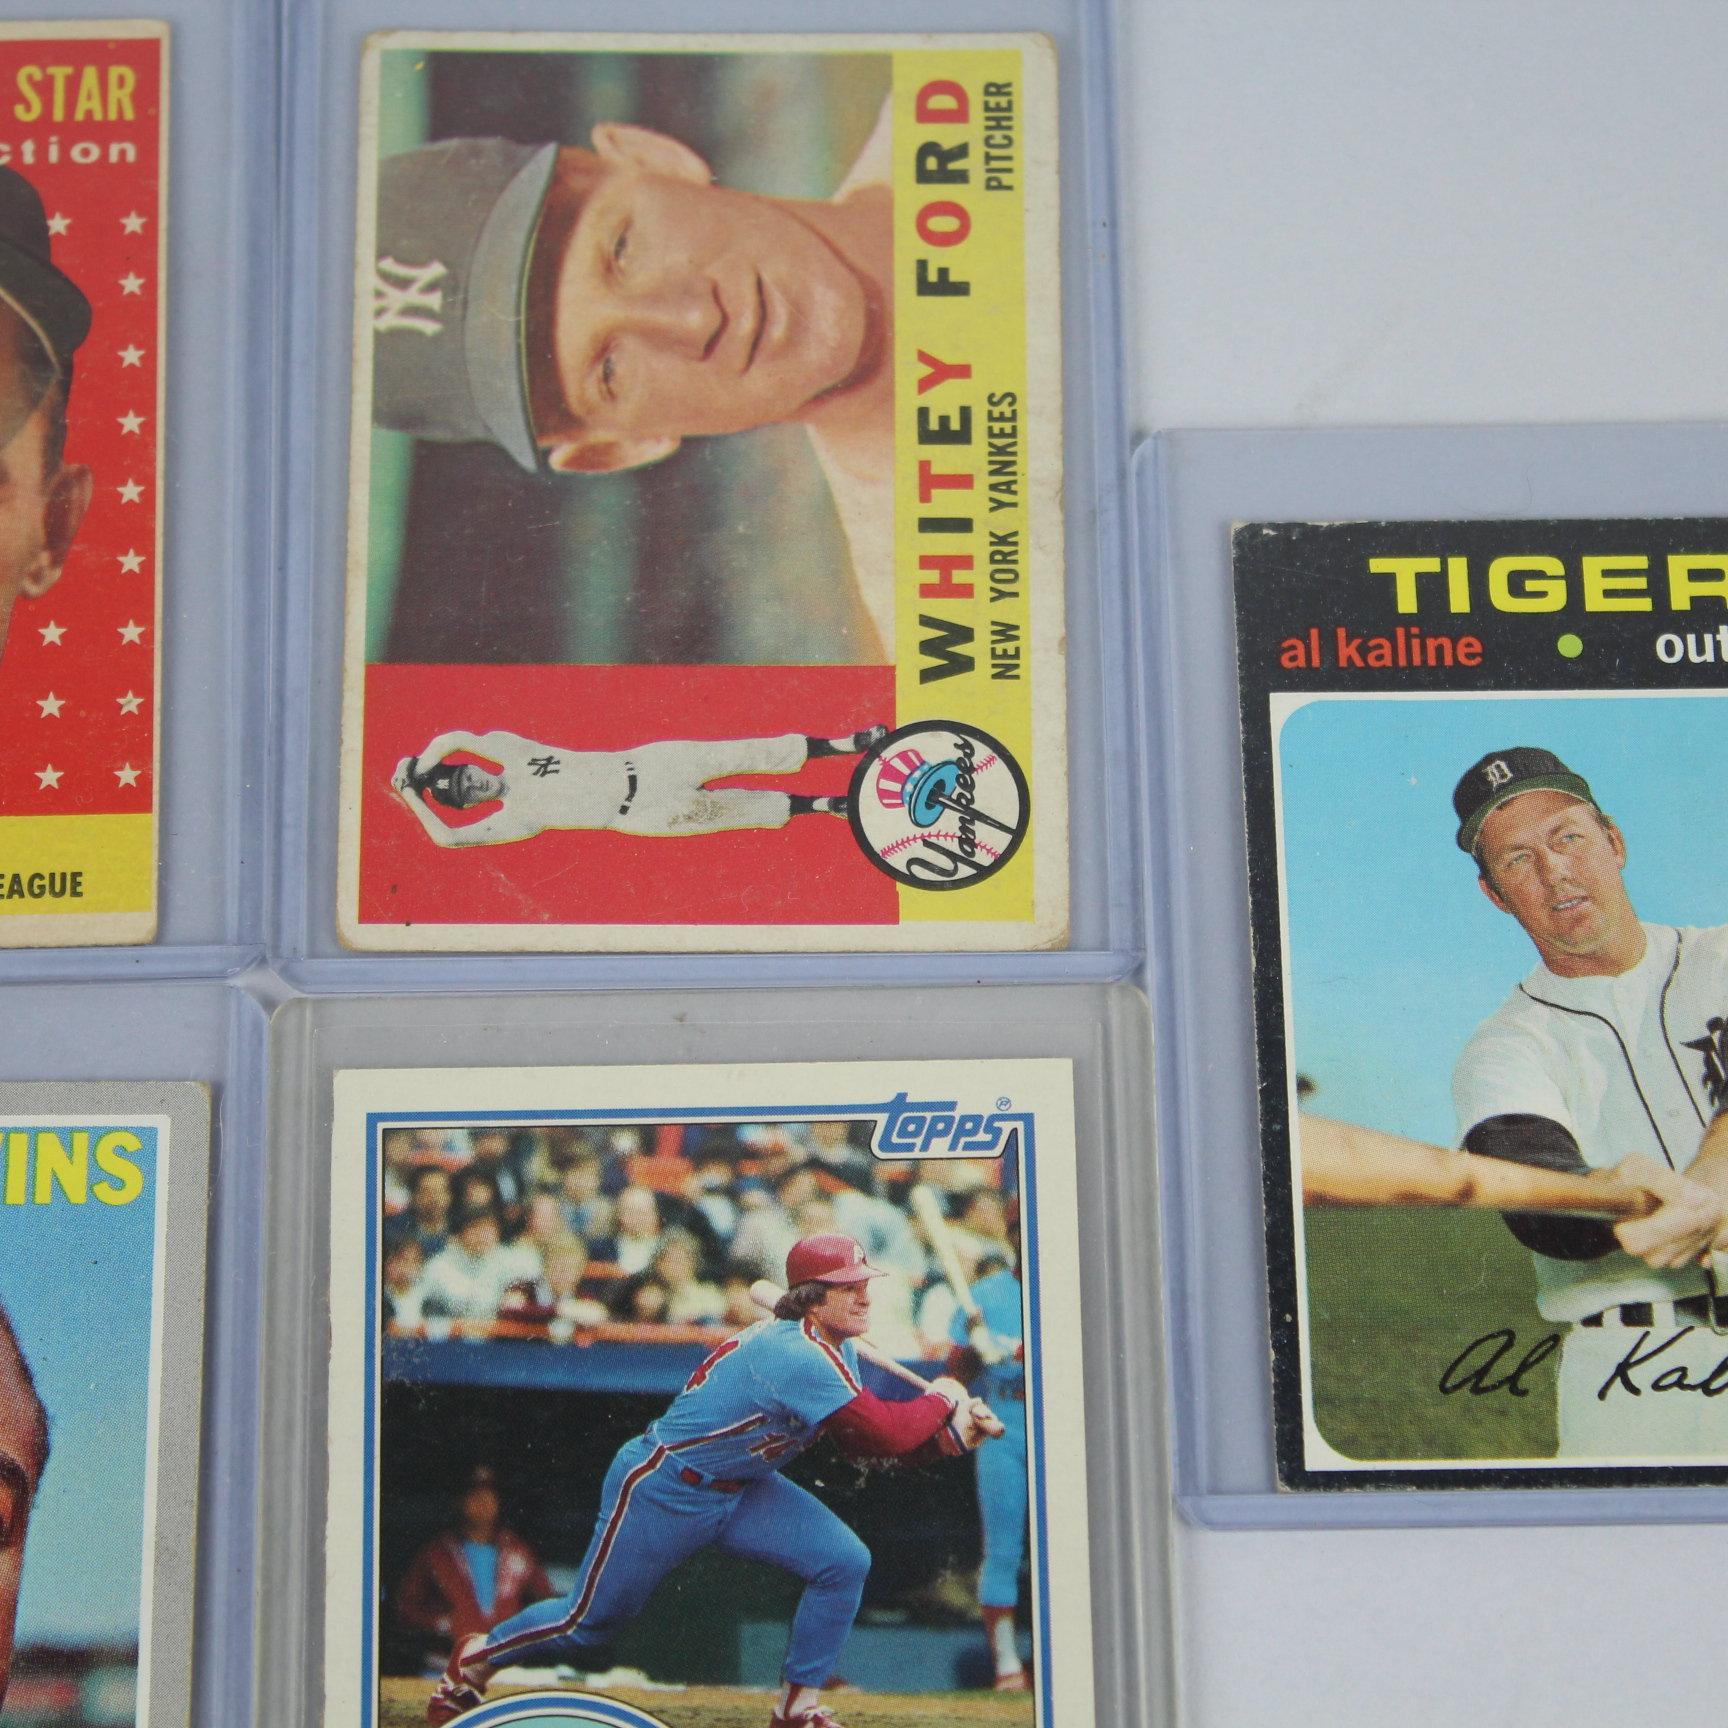 5 Vintage Topps Baseball Cards Group 5